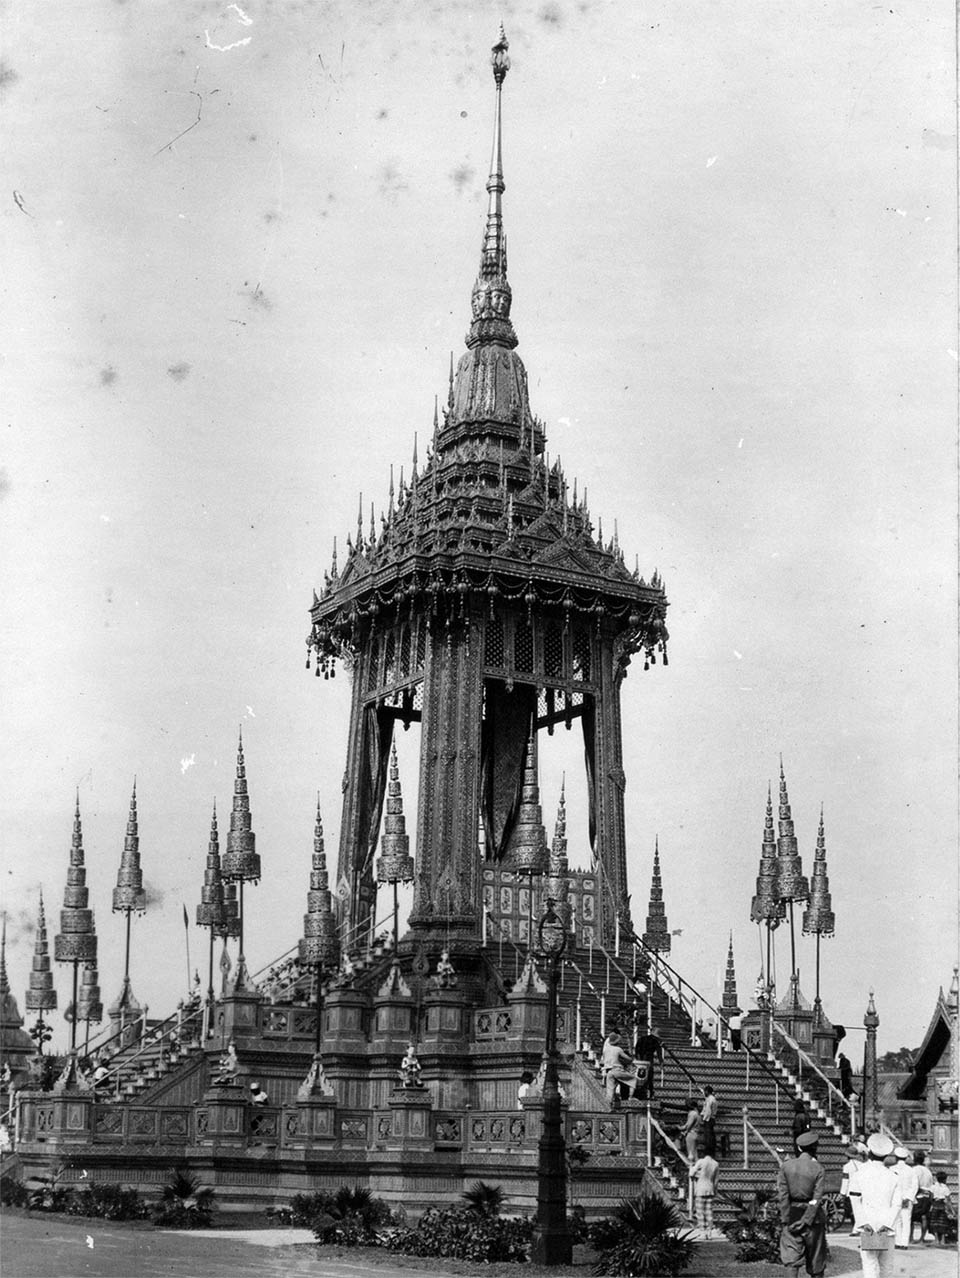 The Phra Meru Mas for King Rama VI